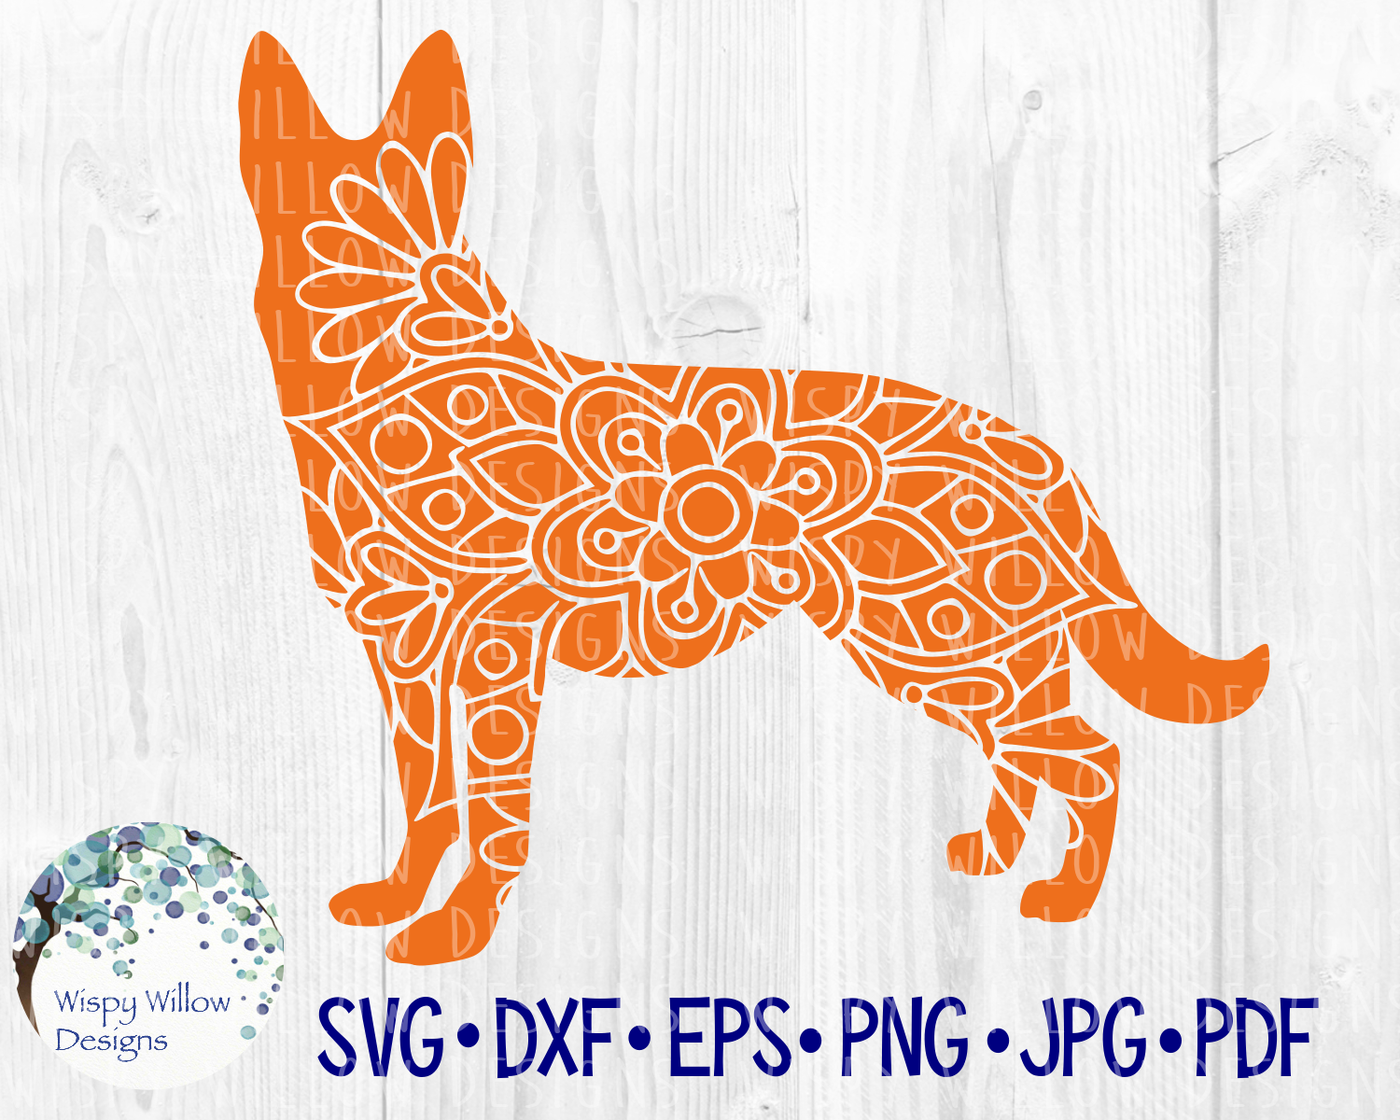 German Shepherd Dog Mandala Svg Dxf Eps Png Jpg Pdf By Wispy Willow Designs Thehungryjpeg Com